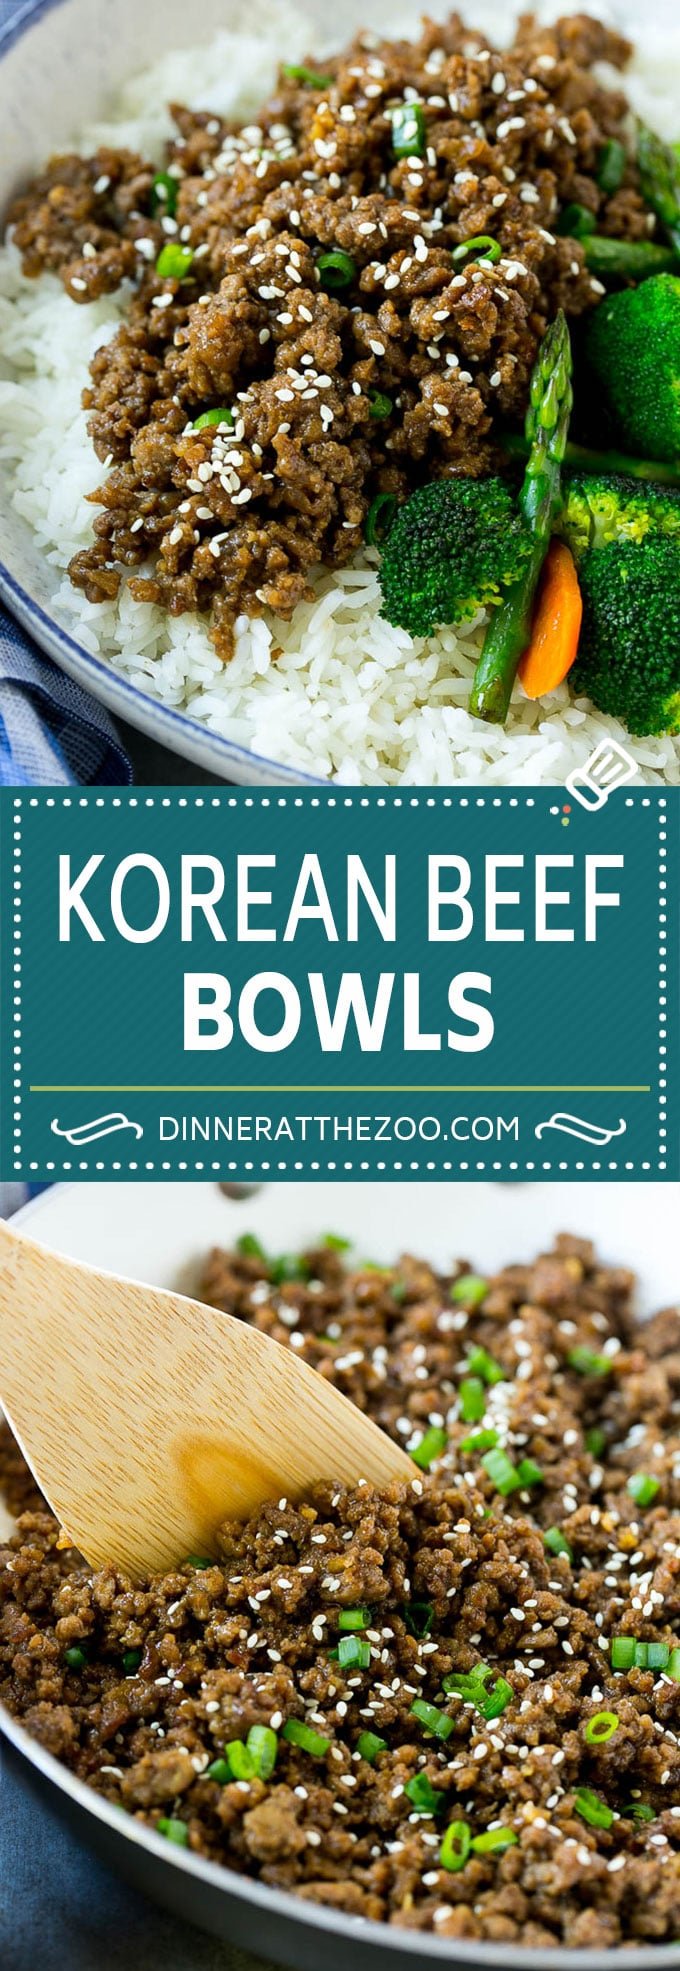 Korean Beef Bowls Recipe | Korean Ground Beef | Asian Beef Recipe | Rice Bowl #groundbeef #asianfood #rice #dinneratthezoo